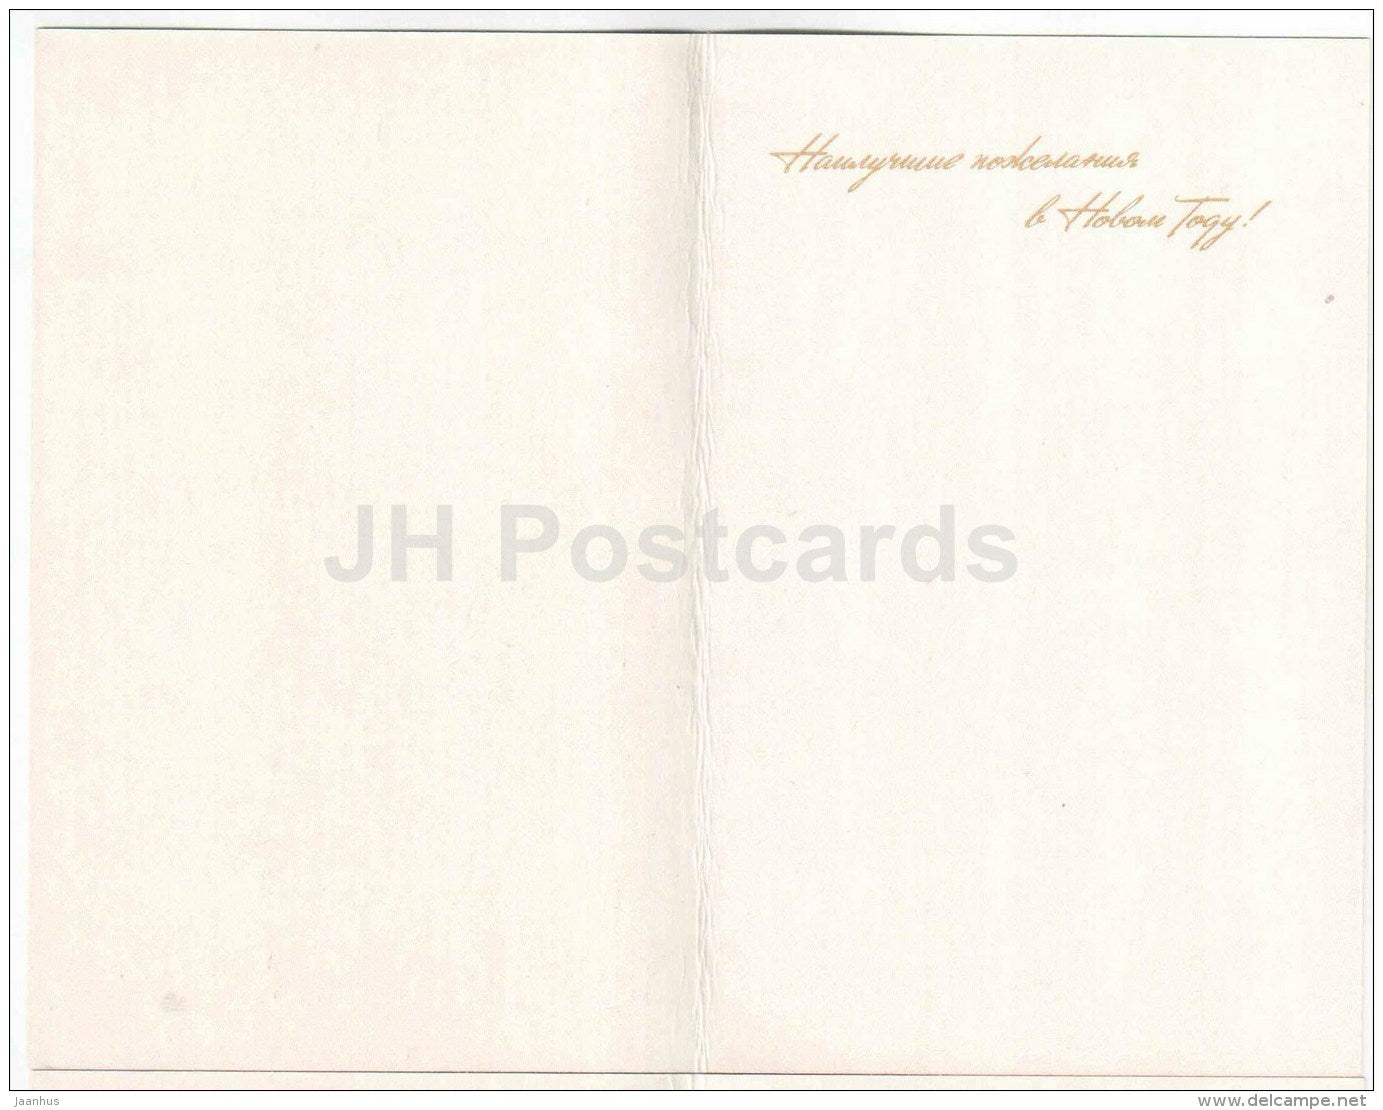 New Year greeting card by G. Kupriyanova - Ded Moroz - deer - sledge - puppet - 1974 - Russia USSR - unused - JH Postcards